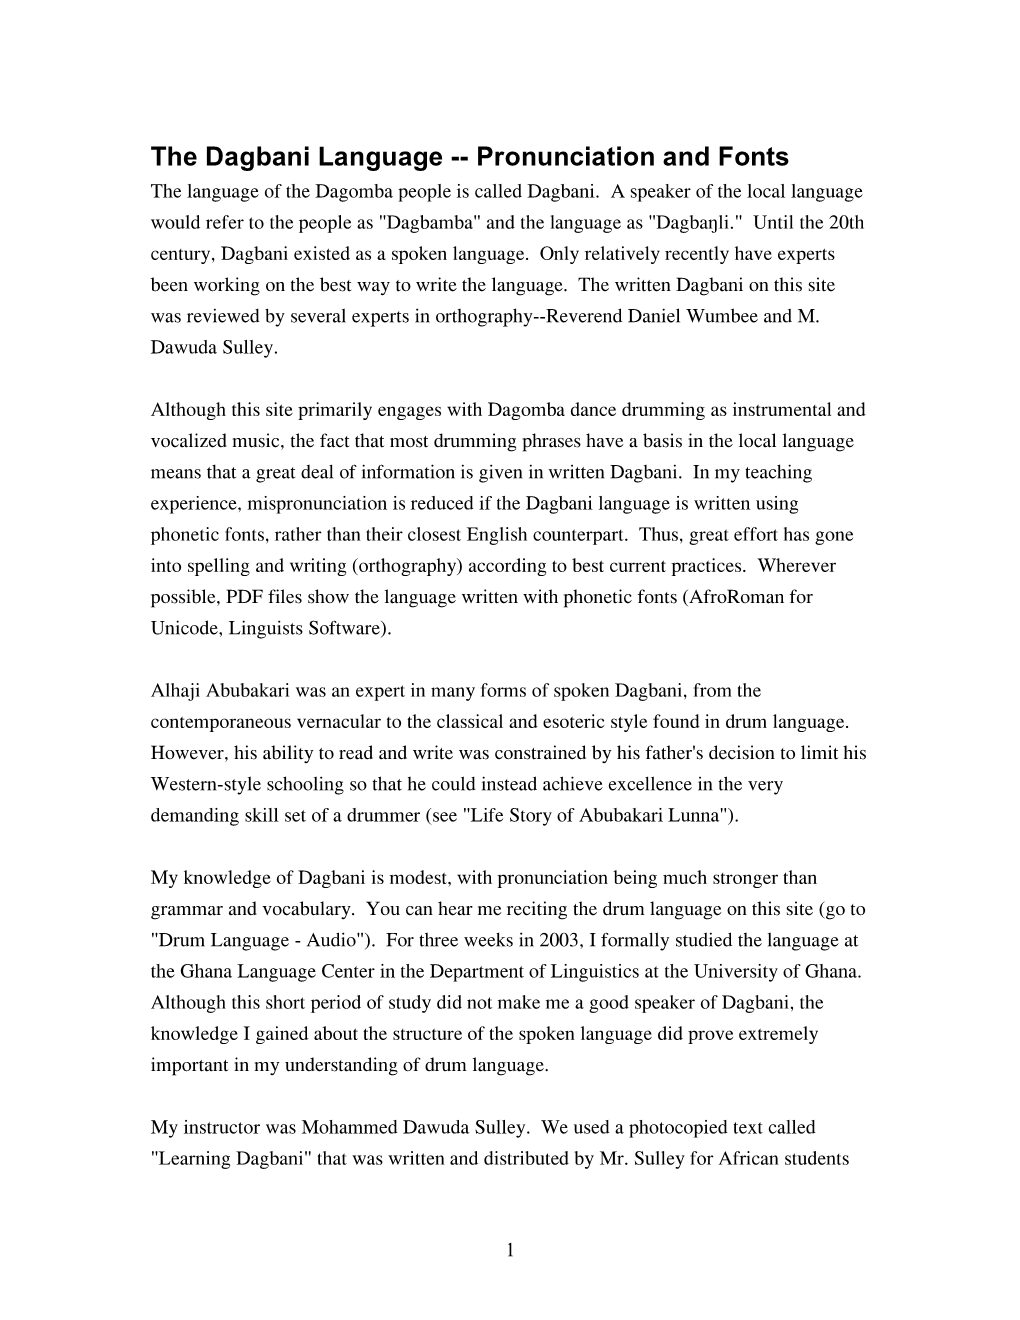 The Dagbani Language -- Pronunciation and Fonts the Language of the Dagomba People Is Called Dagbani